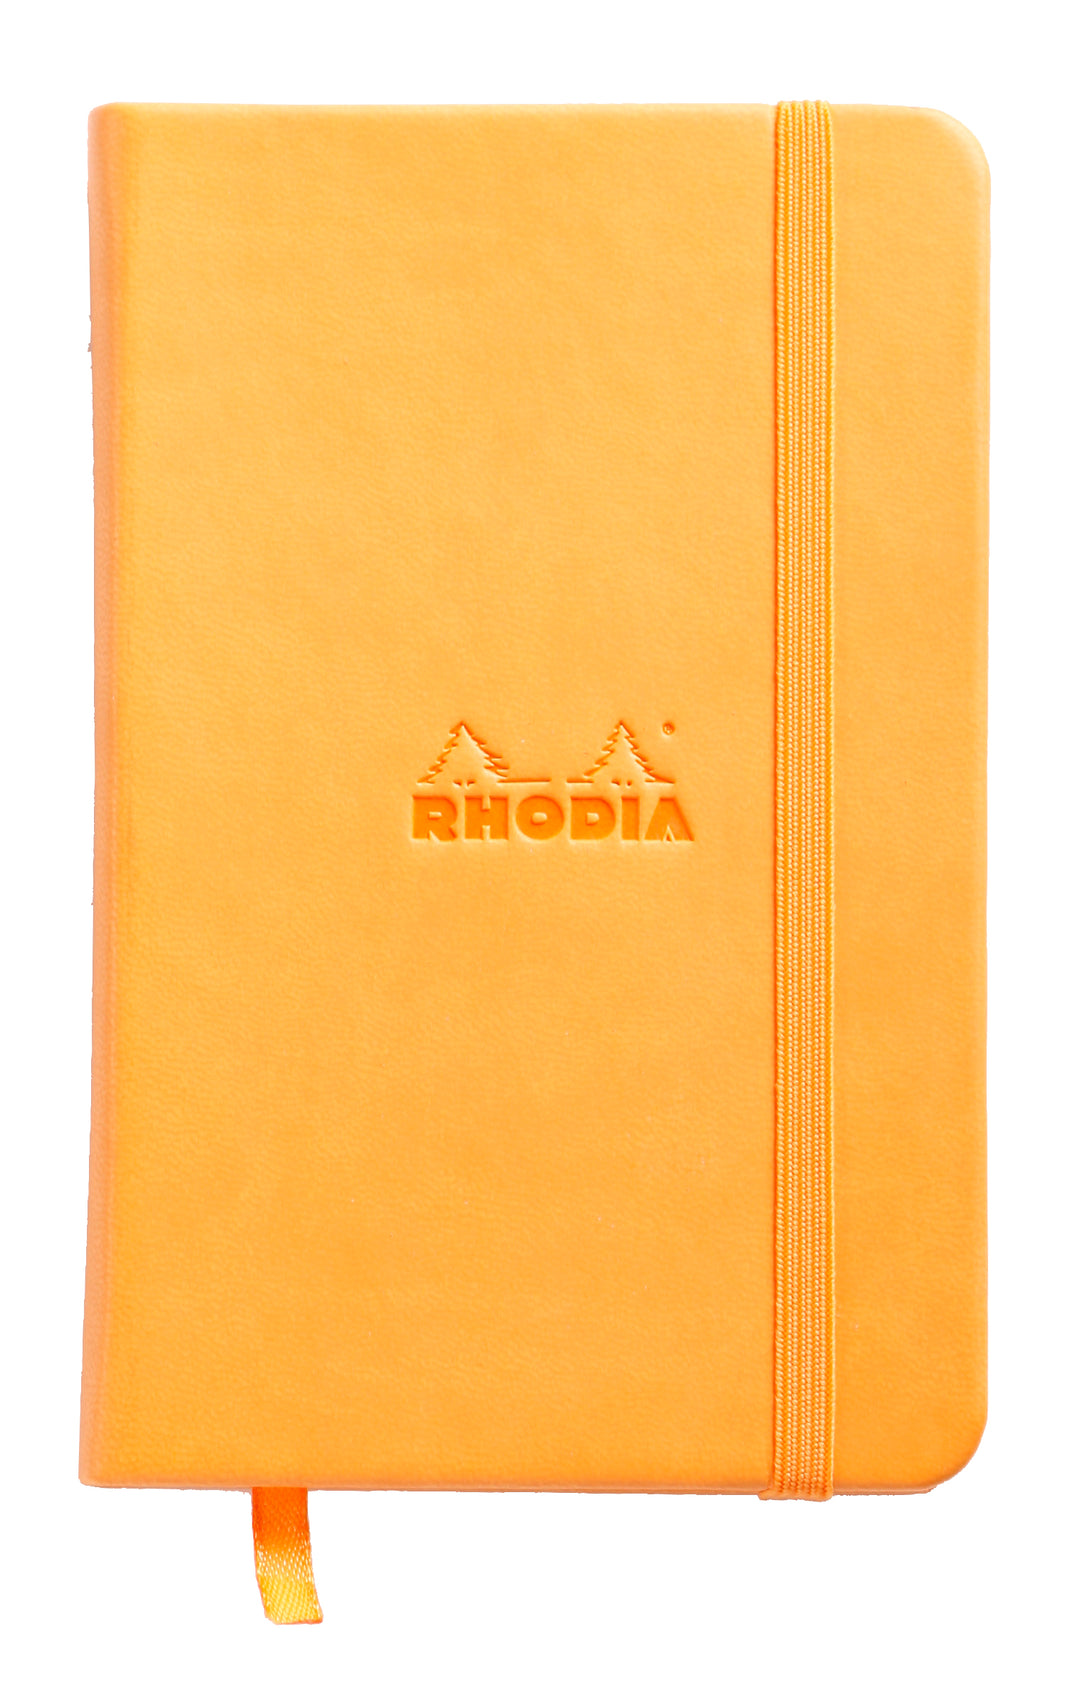 Rhodia Boutique Hardbound Dot Ruled Webnotebook - A4